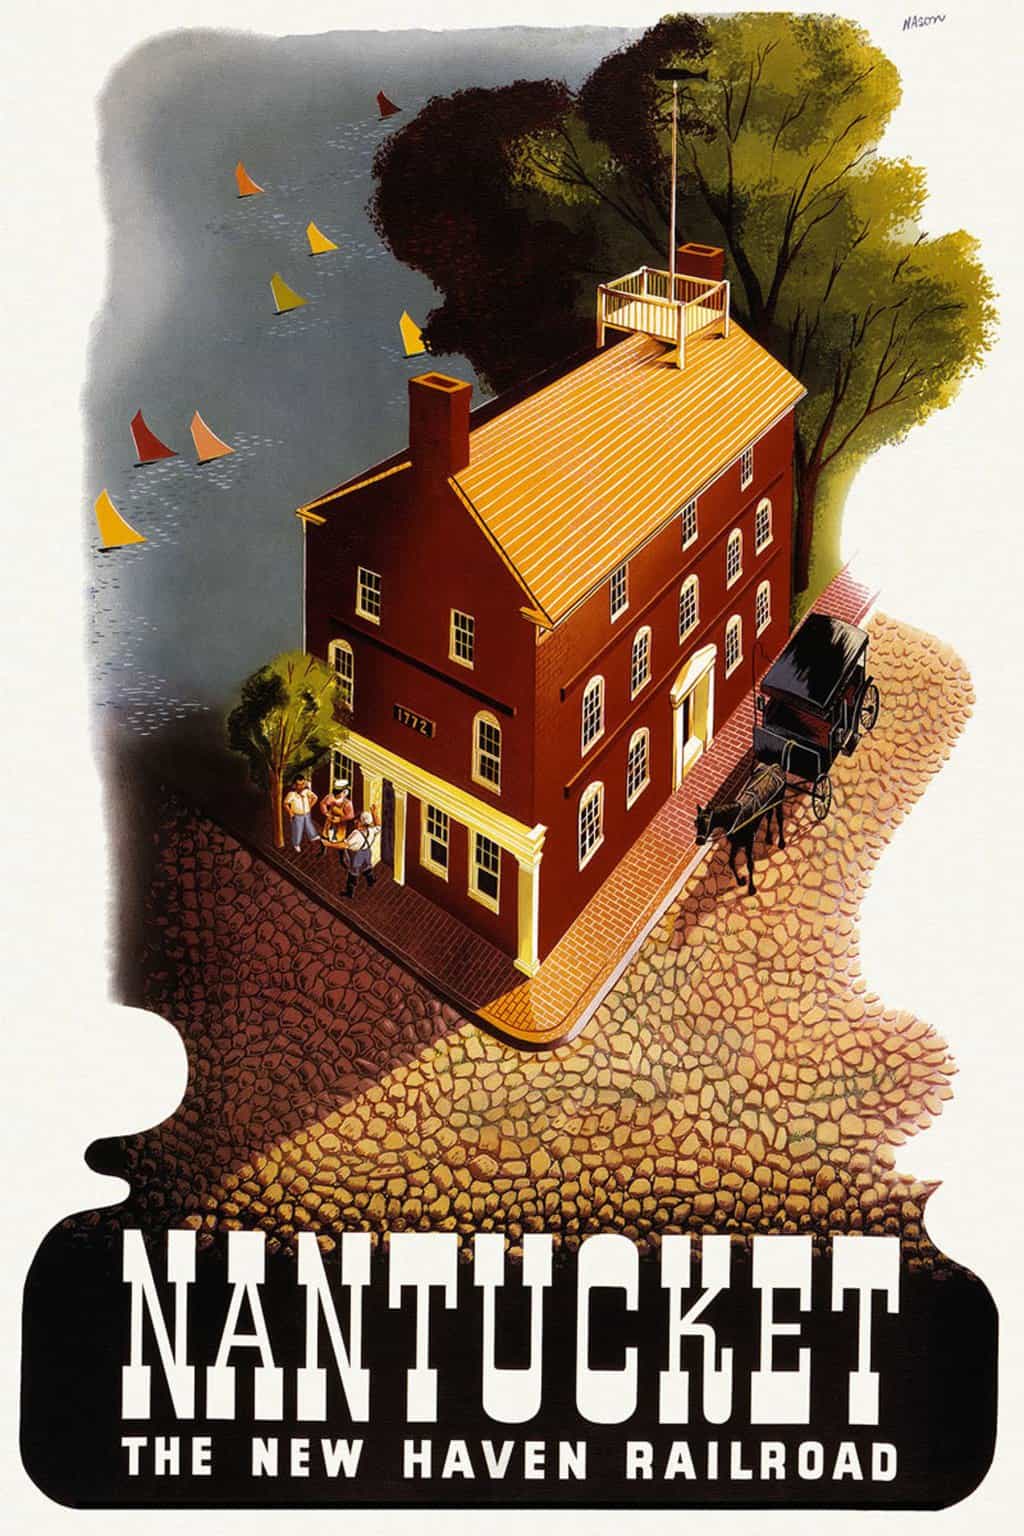 Nantucket The New Haven Railroad Ben Nason 1940 Vintage Travel Poster